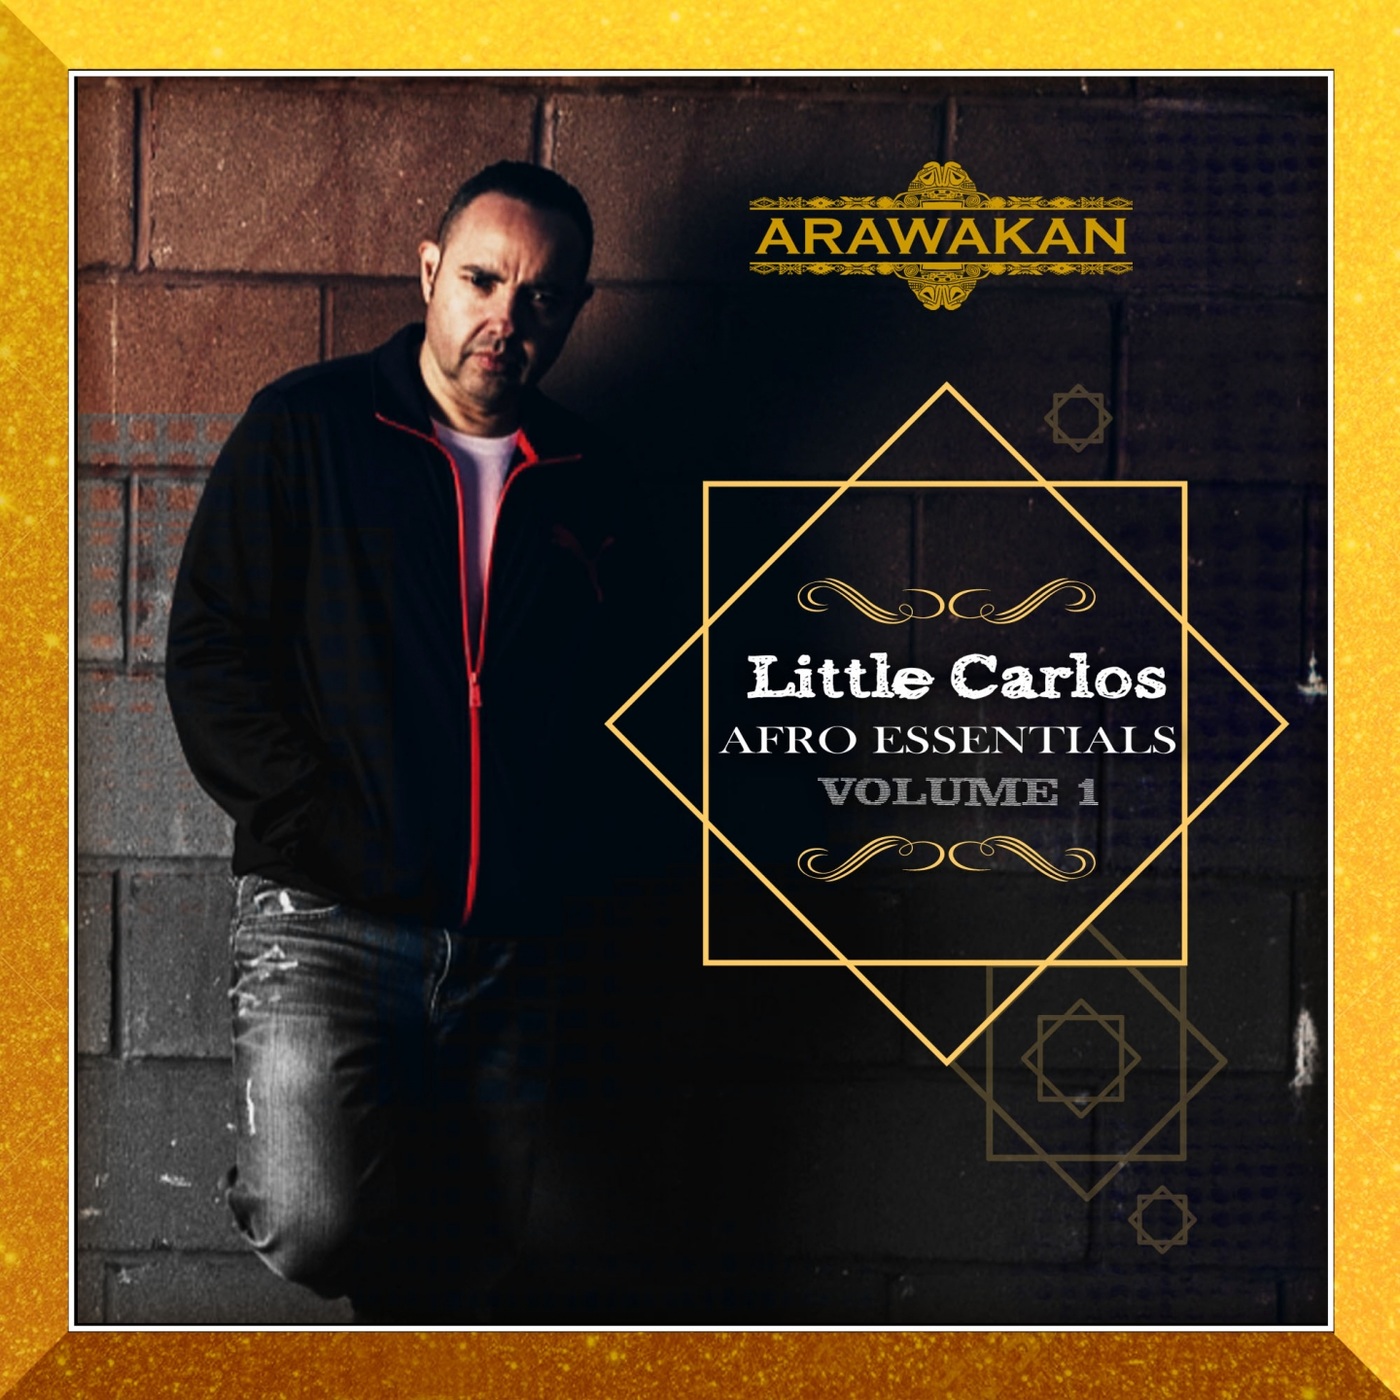 VA - Little Carlos "Arawakan Afro Essentials", Vol. 1 / Arawakan Records